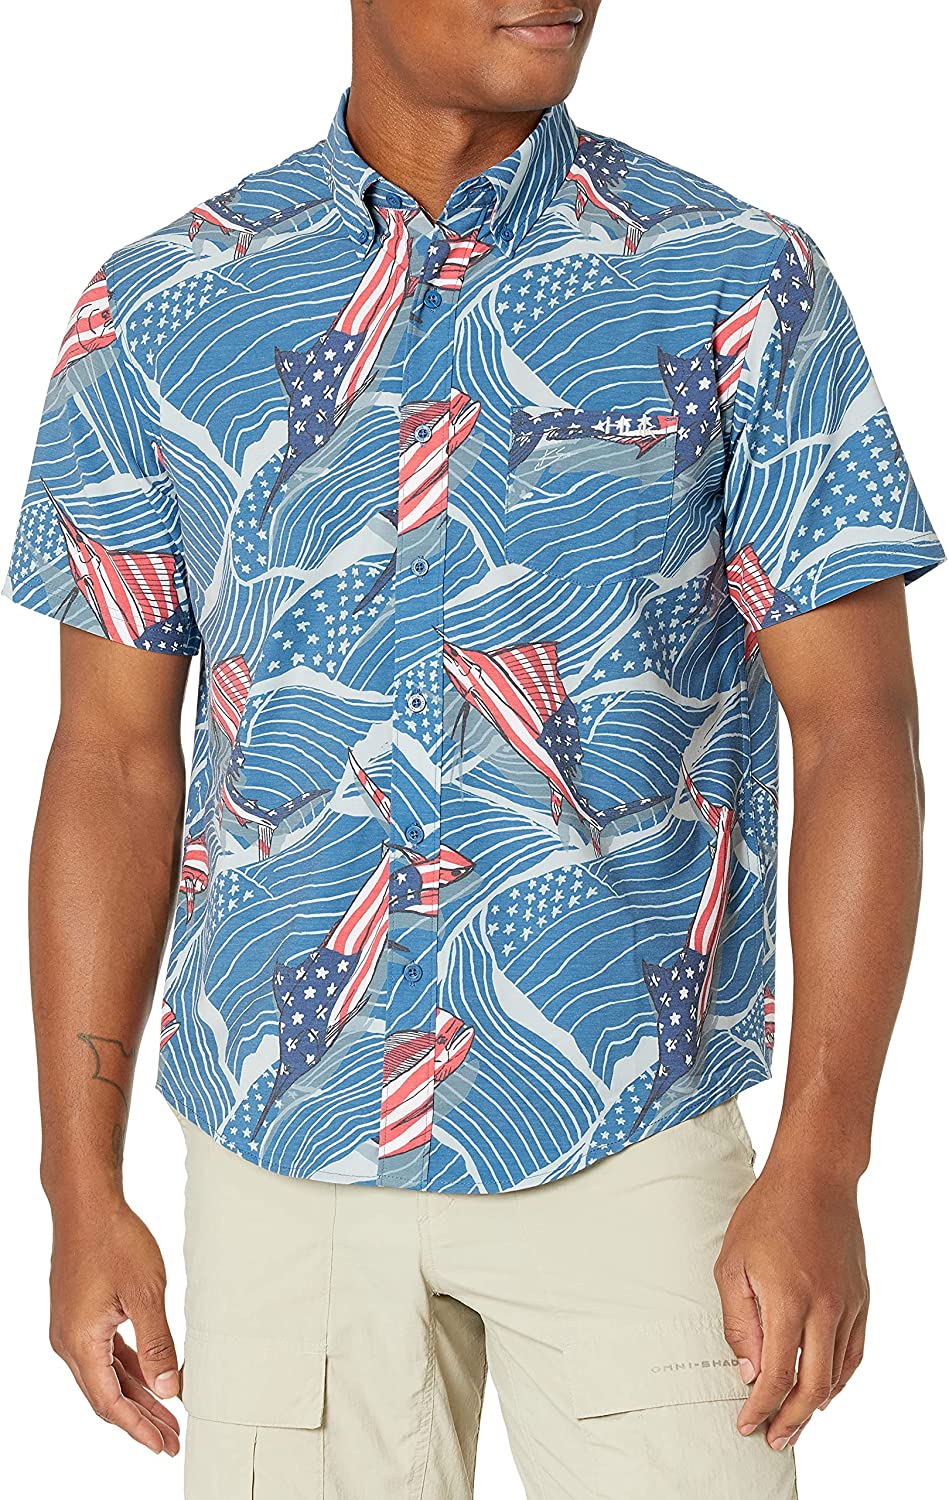 Huk Kona Button-Down Shirt - The Compleat Angler